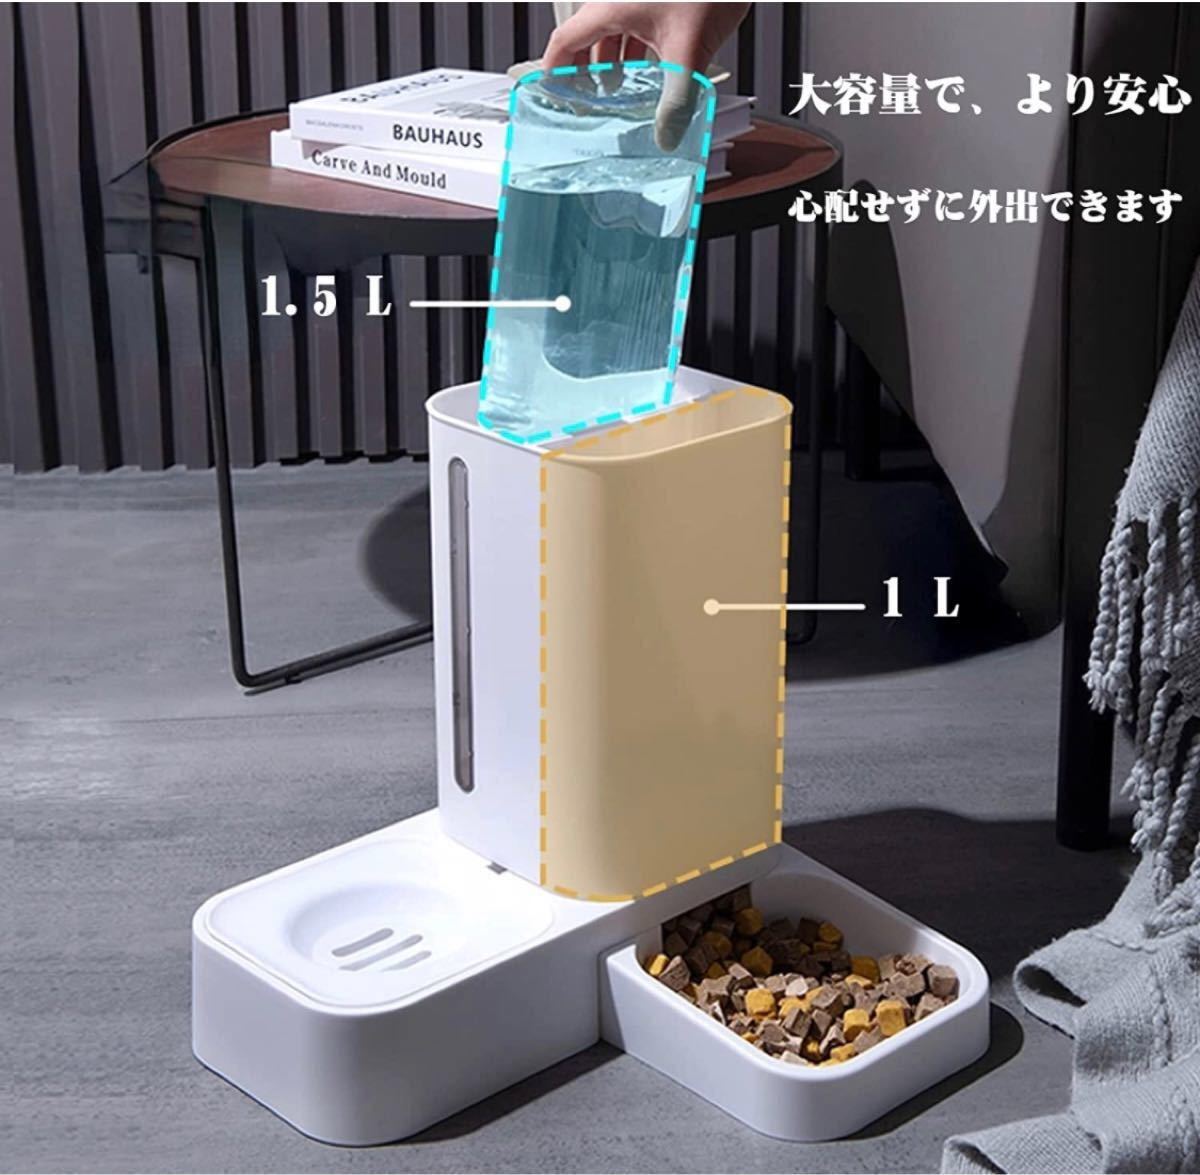 猫 犬 食器 1L 自動給餌器 1.5L 自動給水器 ペット給水器 水入れ 餌入れ 大 中 小型 猫犬用 自動餌やり機 水飲み器 